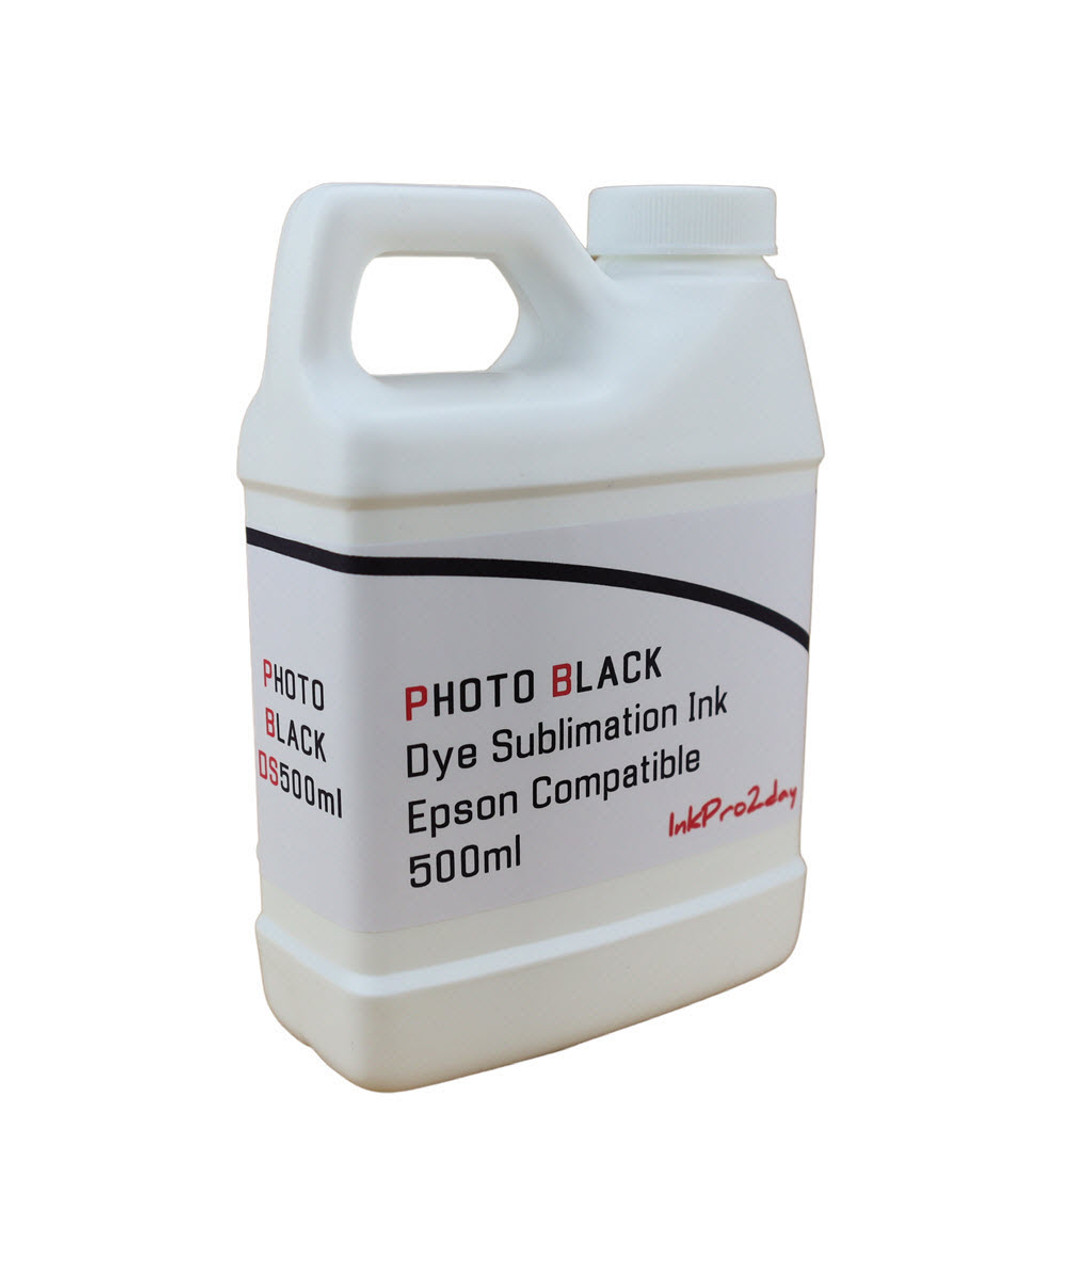 Photo Black Dye Sublimation Ink 500ml Bottle for Epson Stylus Pro 7900 9900 printers